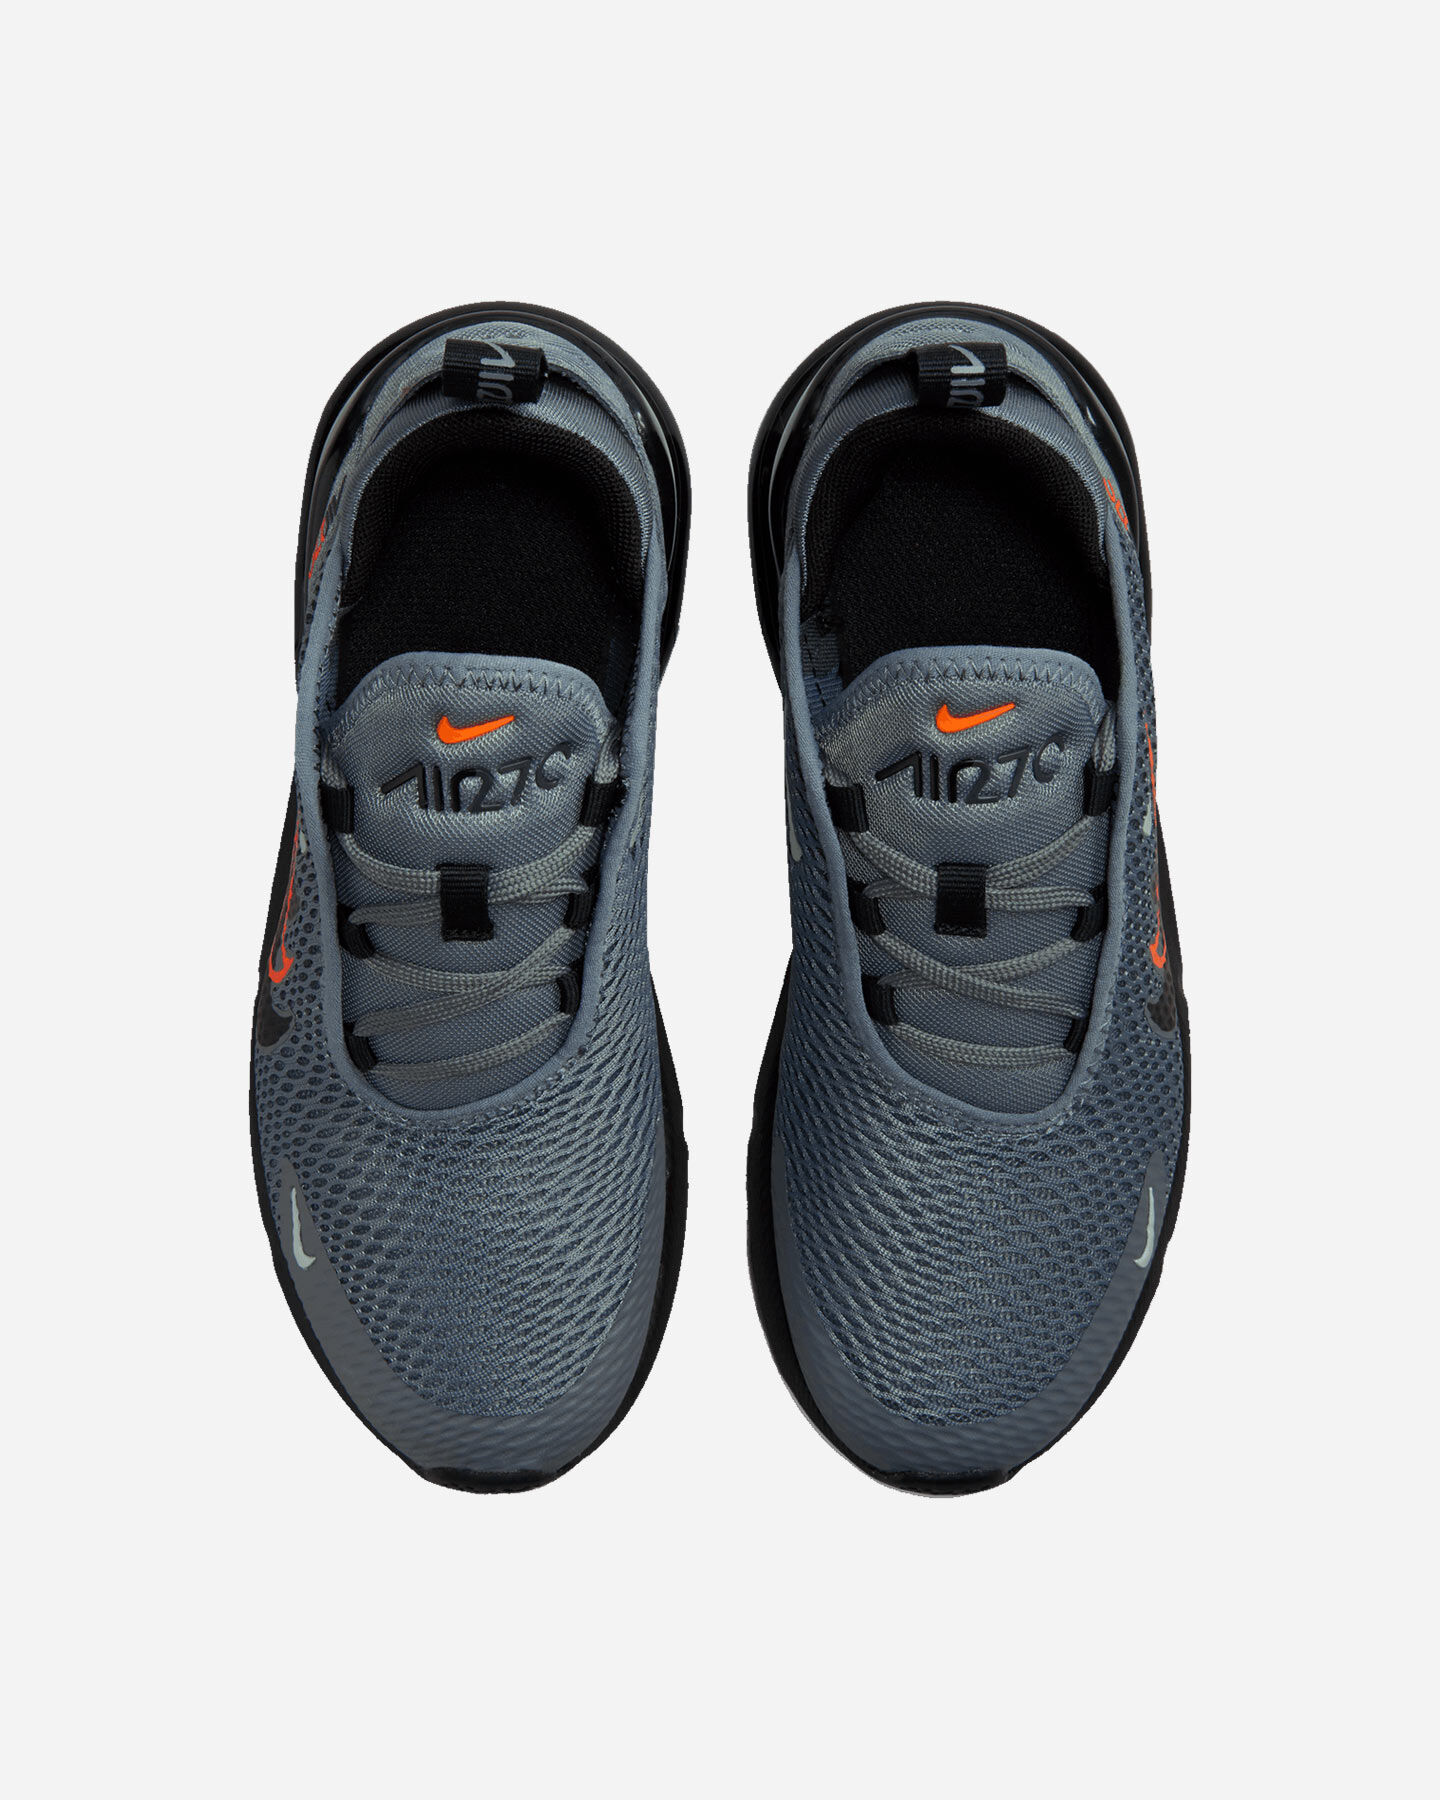  Scarpe sneakers NIKE AIR MAX 270 PS JR S5599902|001|13C scatto 3